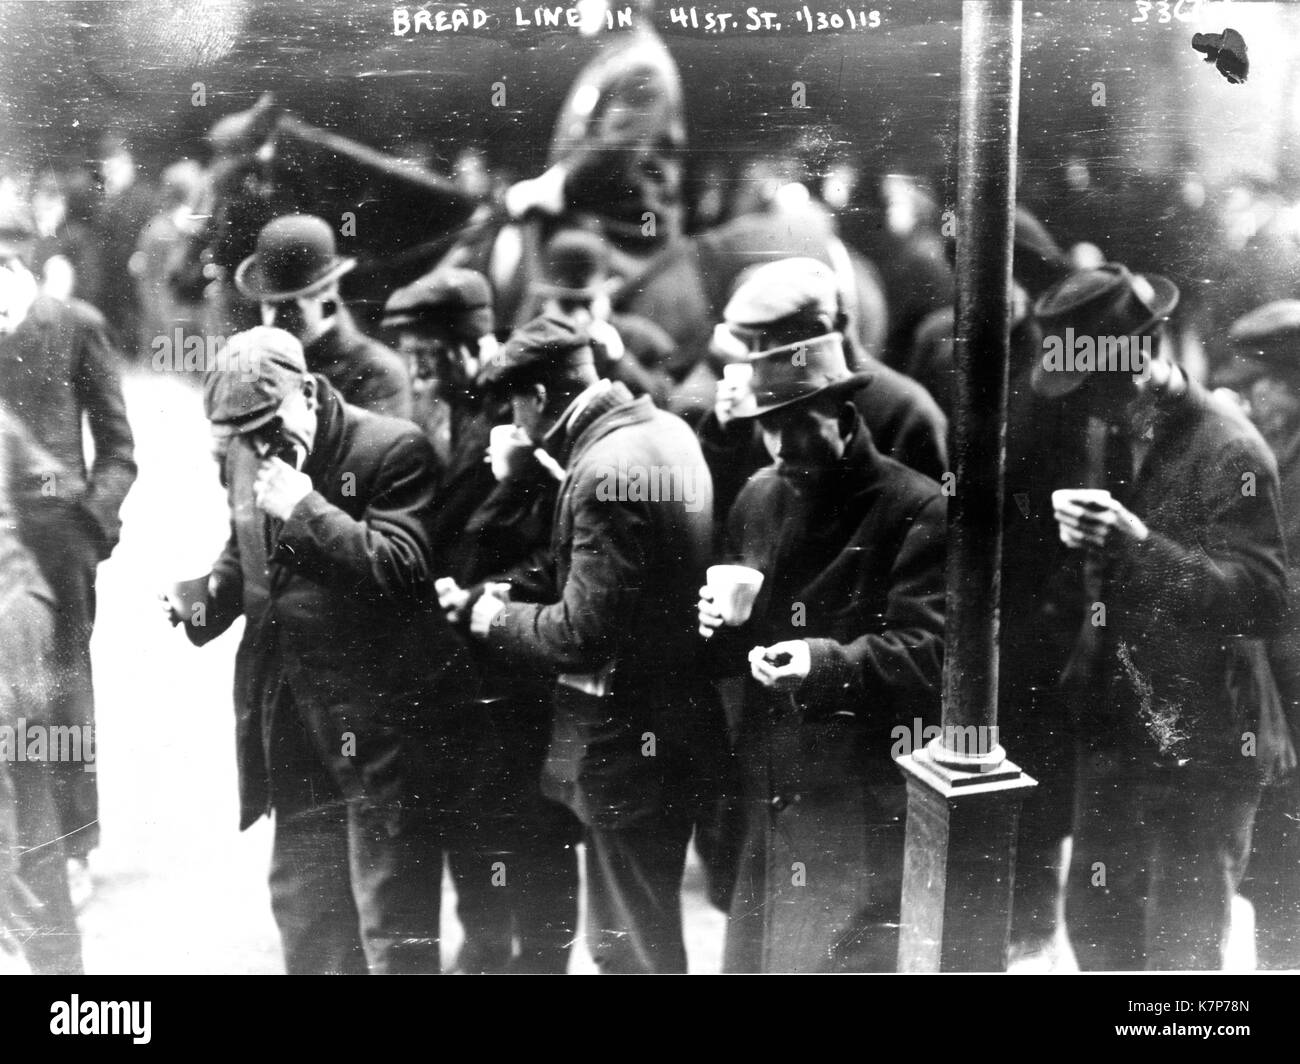 Brot Line Feeding arbeitslose Männer Kaffee und Donuts, Washington, DC, am 01/30/1915. Stockfoto